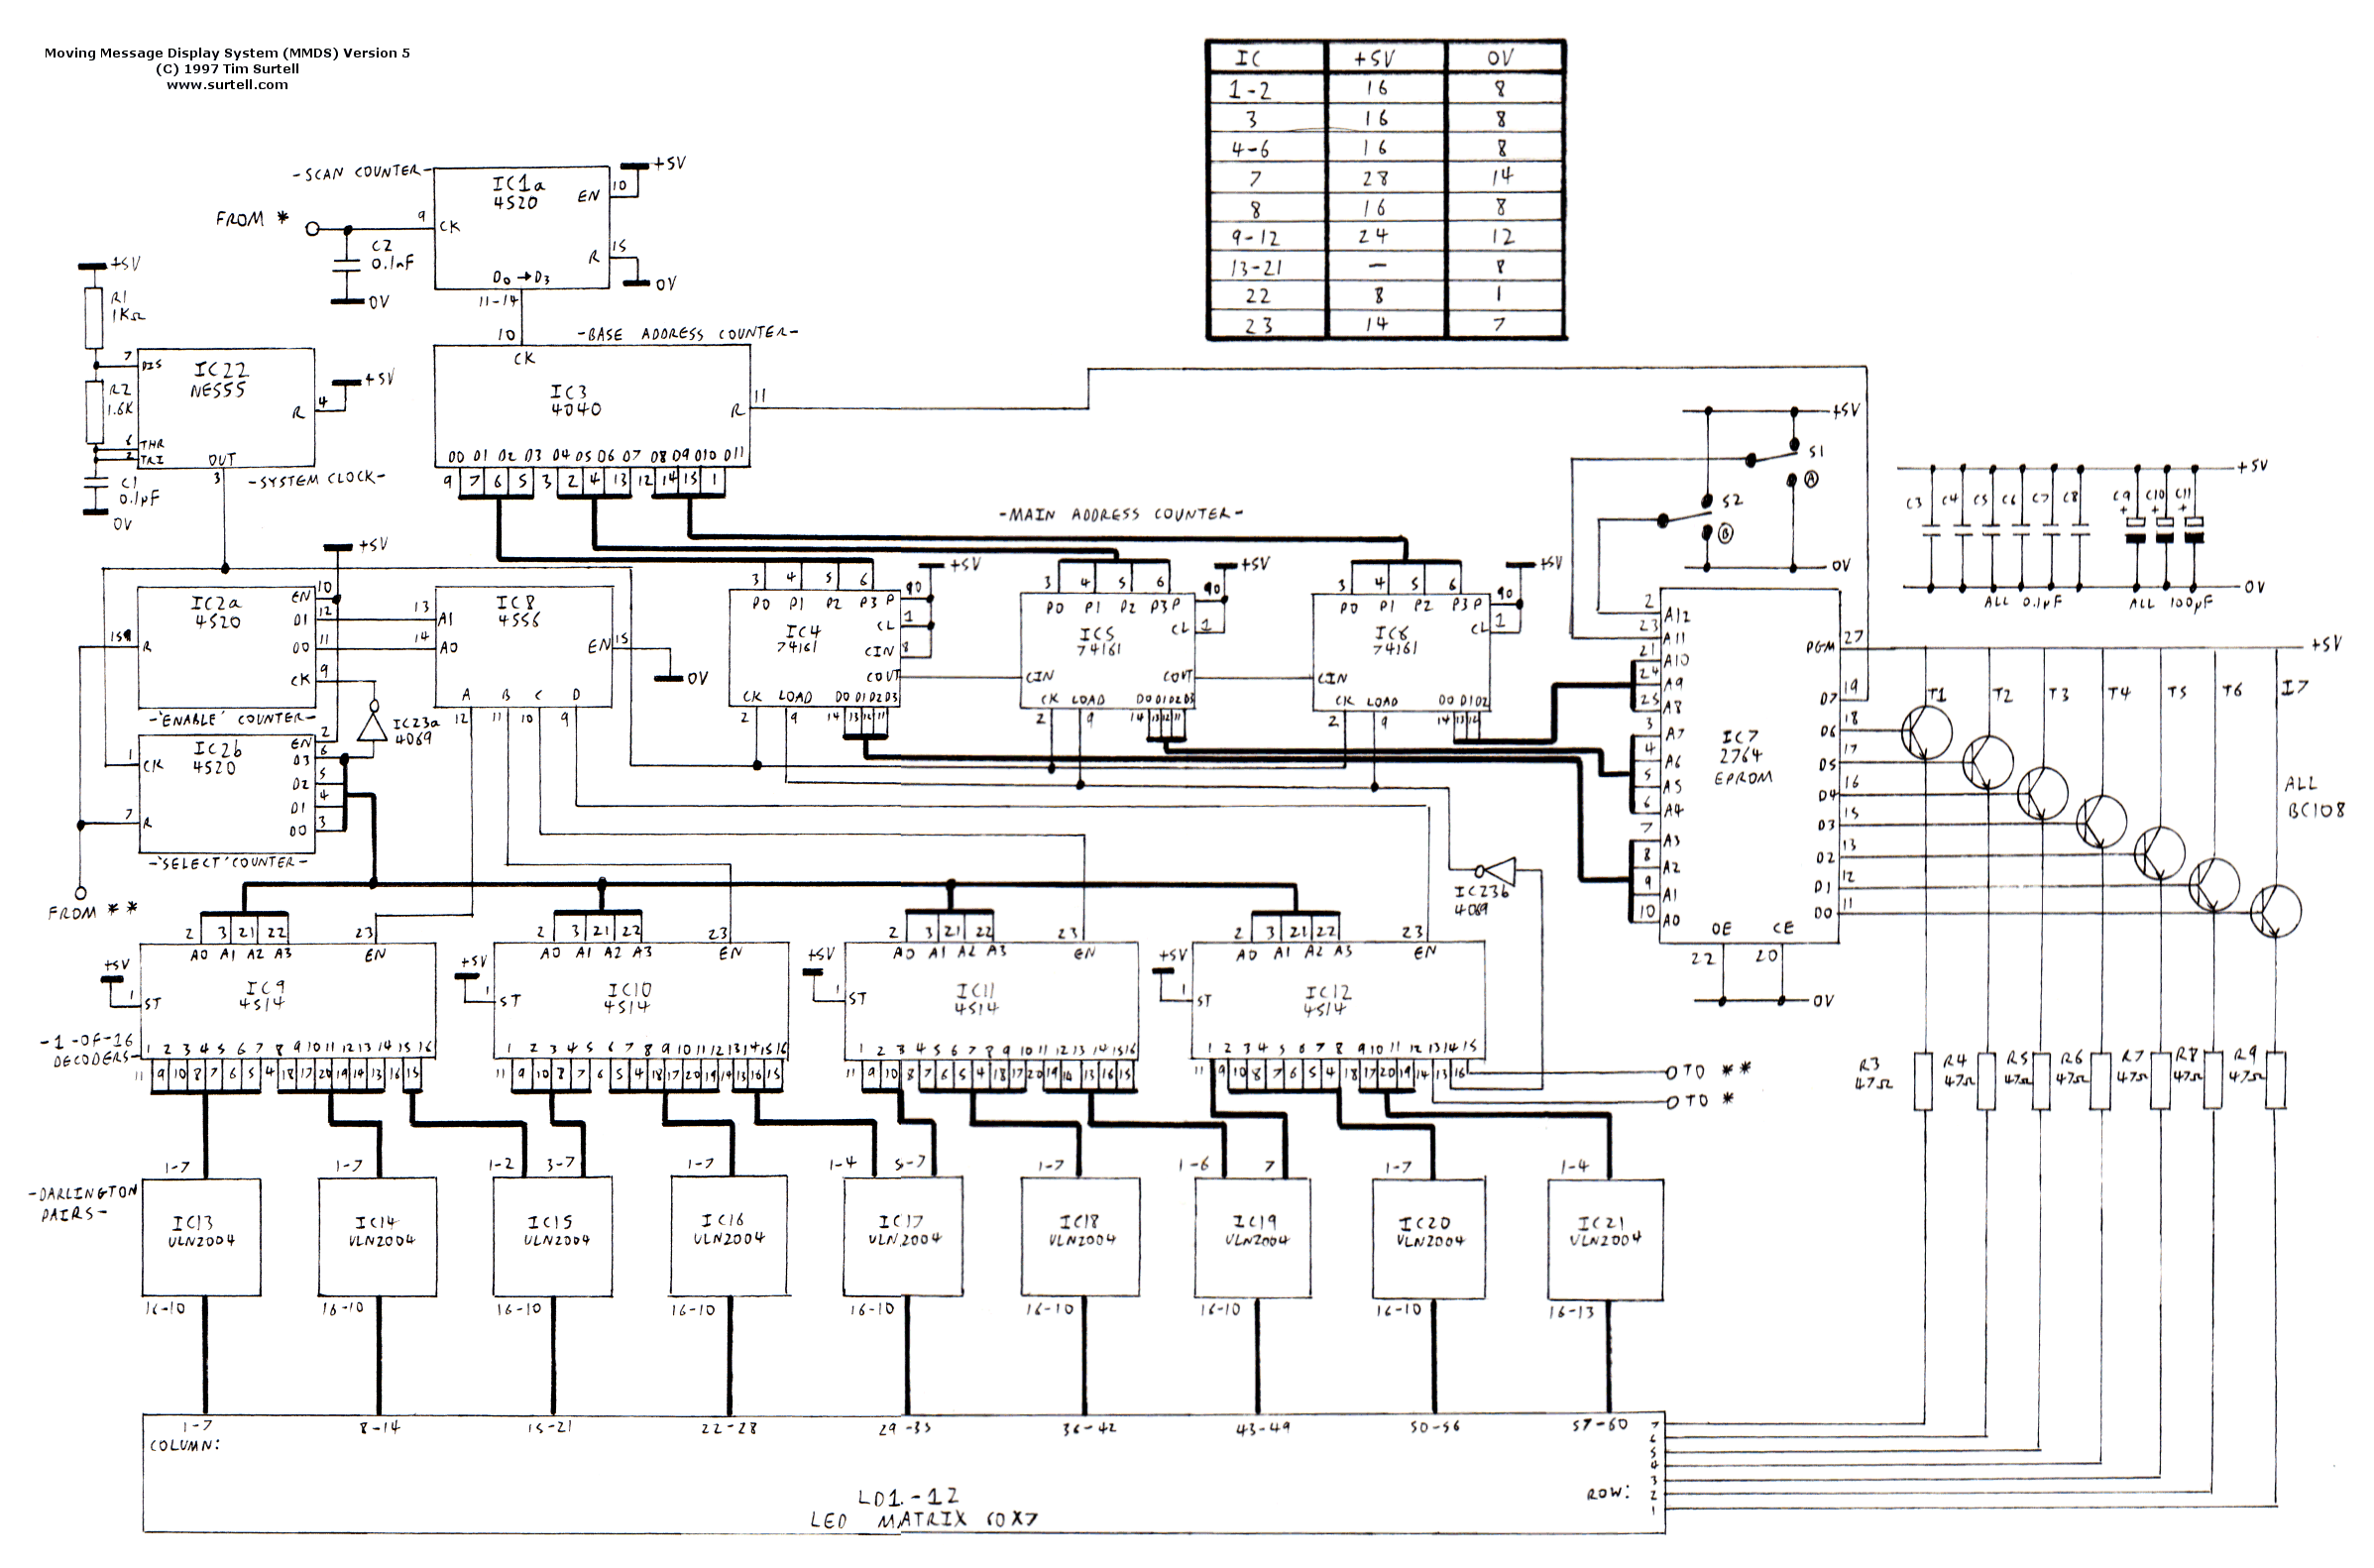 Figure 19: Full circuit diagram (version 5) — Click to enlarge